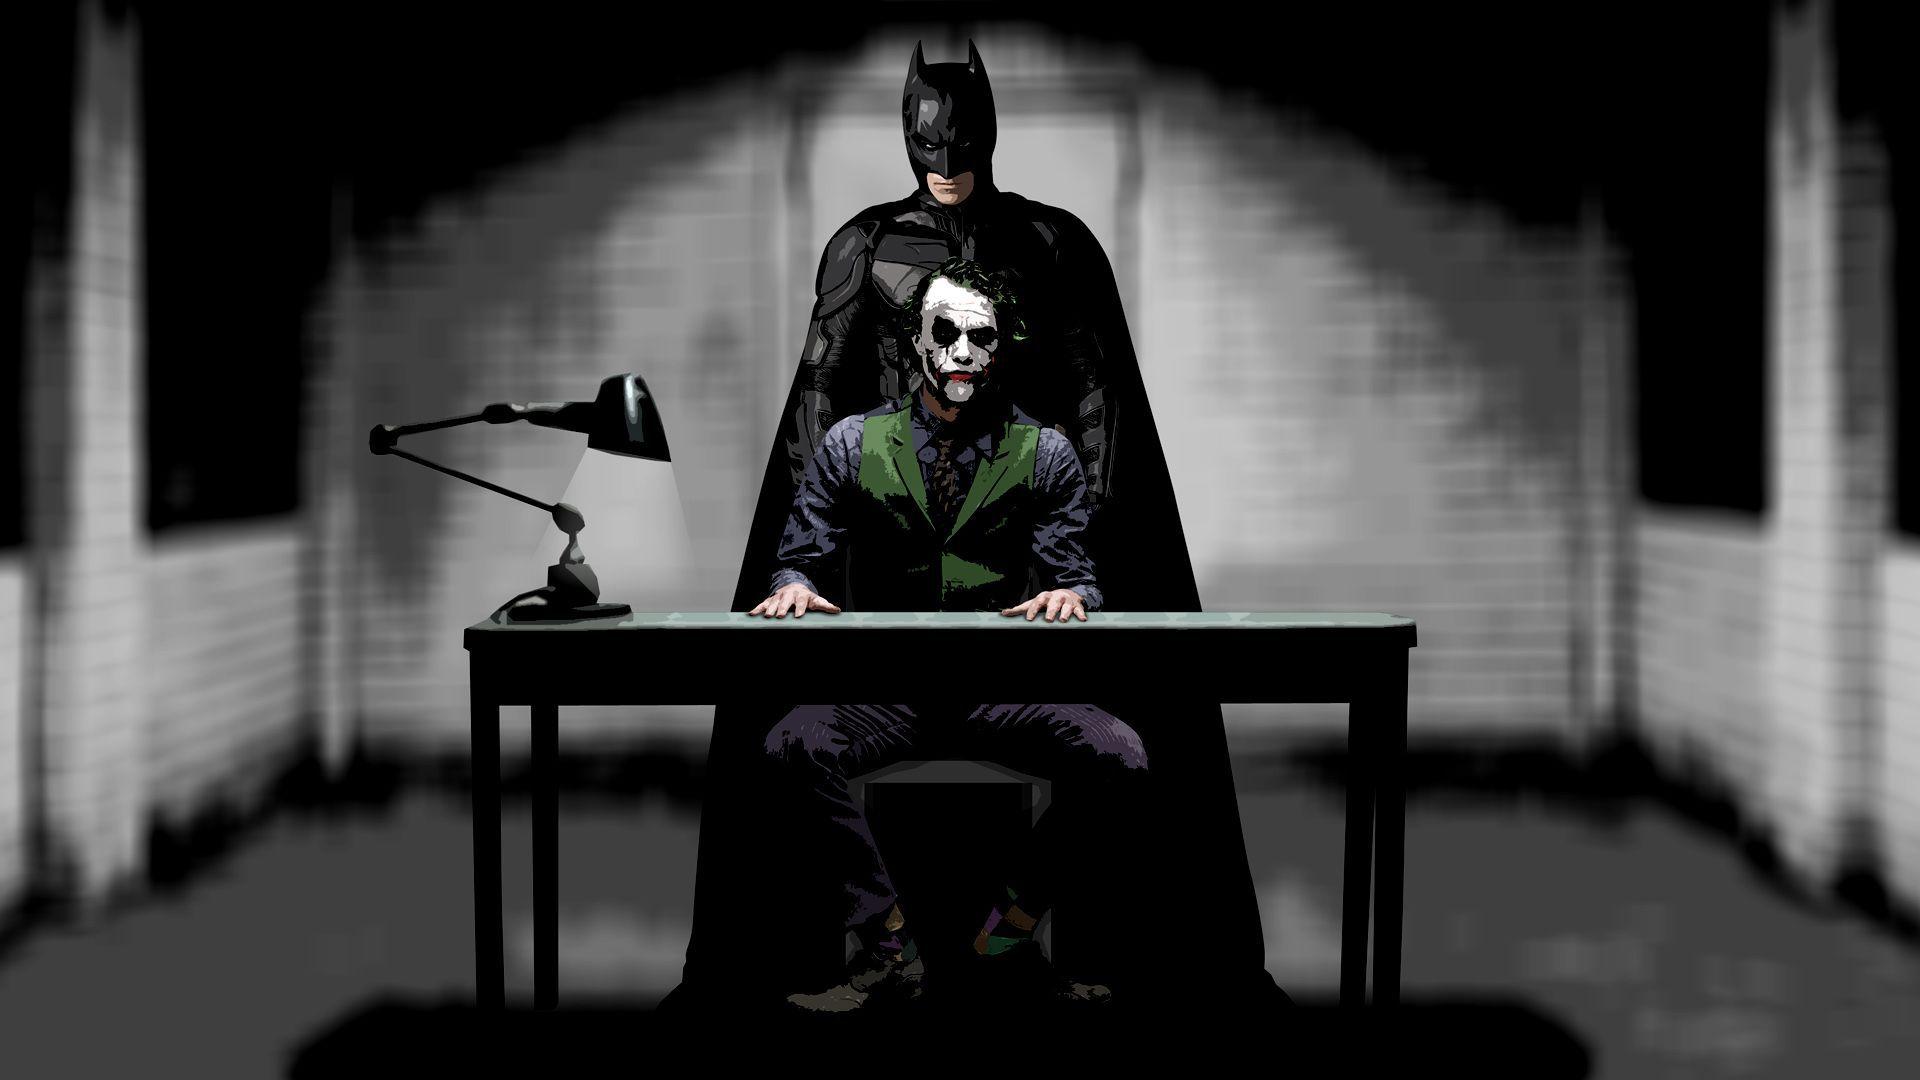 Batman Joker Hd Wallpapers 1080p Wallpaper Cave